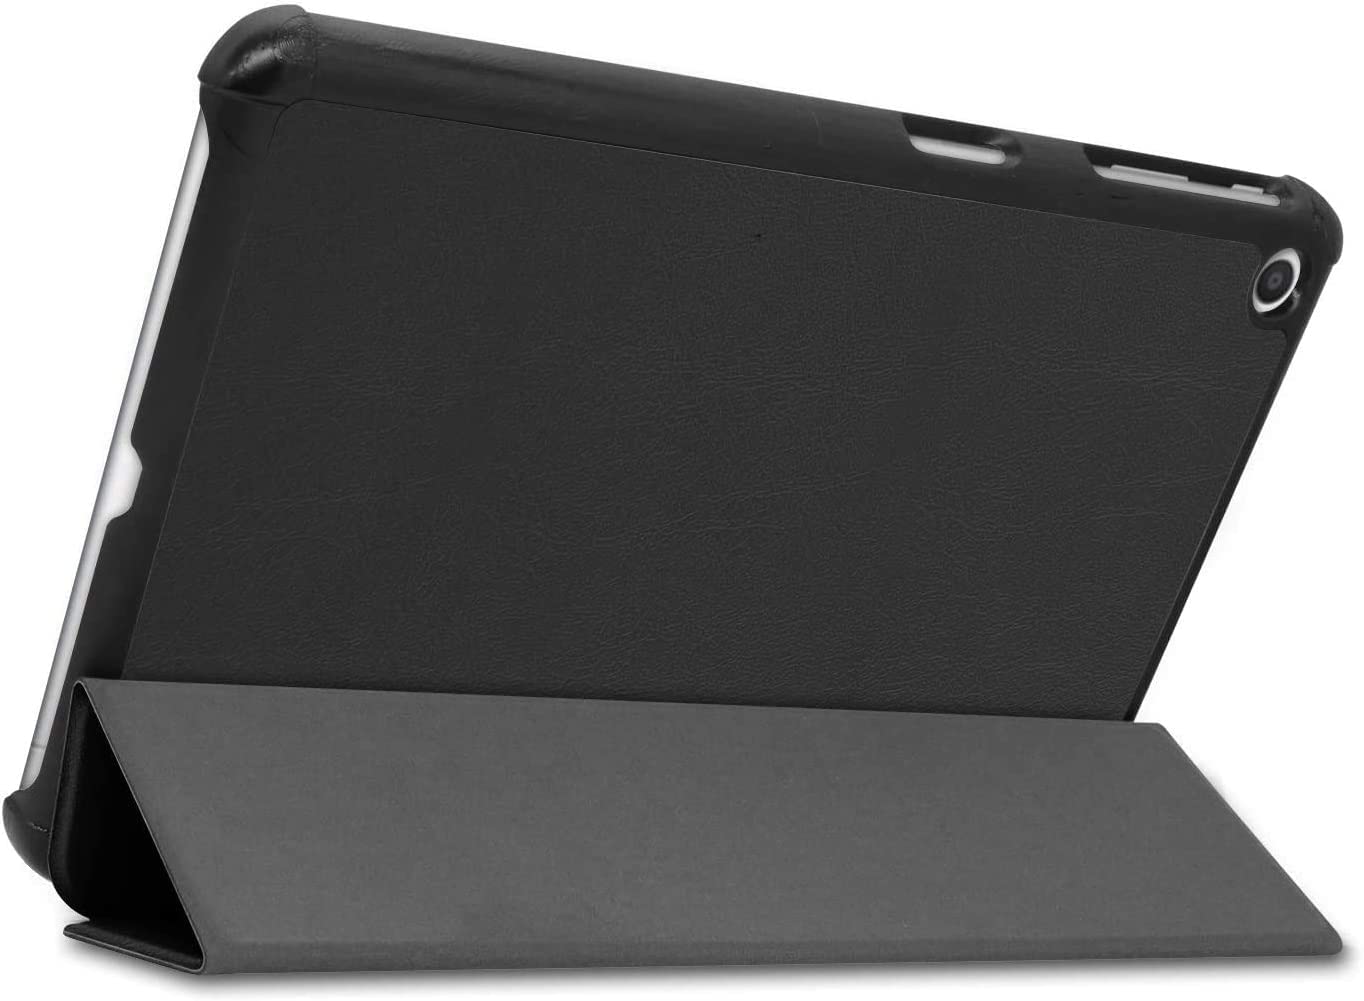 LG G Pad 5 10.1-inch (1920x1200) 4GB LTE Unlock Tablet, Qualcomm MSM8996 Snapdragon Processor, 4GB RAM, 32GB Storage, Bluetooth, Fingerprint Sensor, Android 9.0 + Accessories